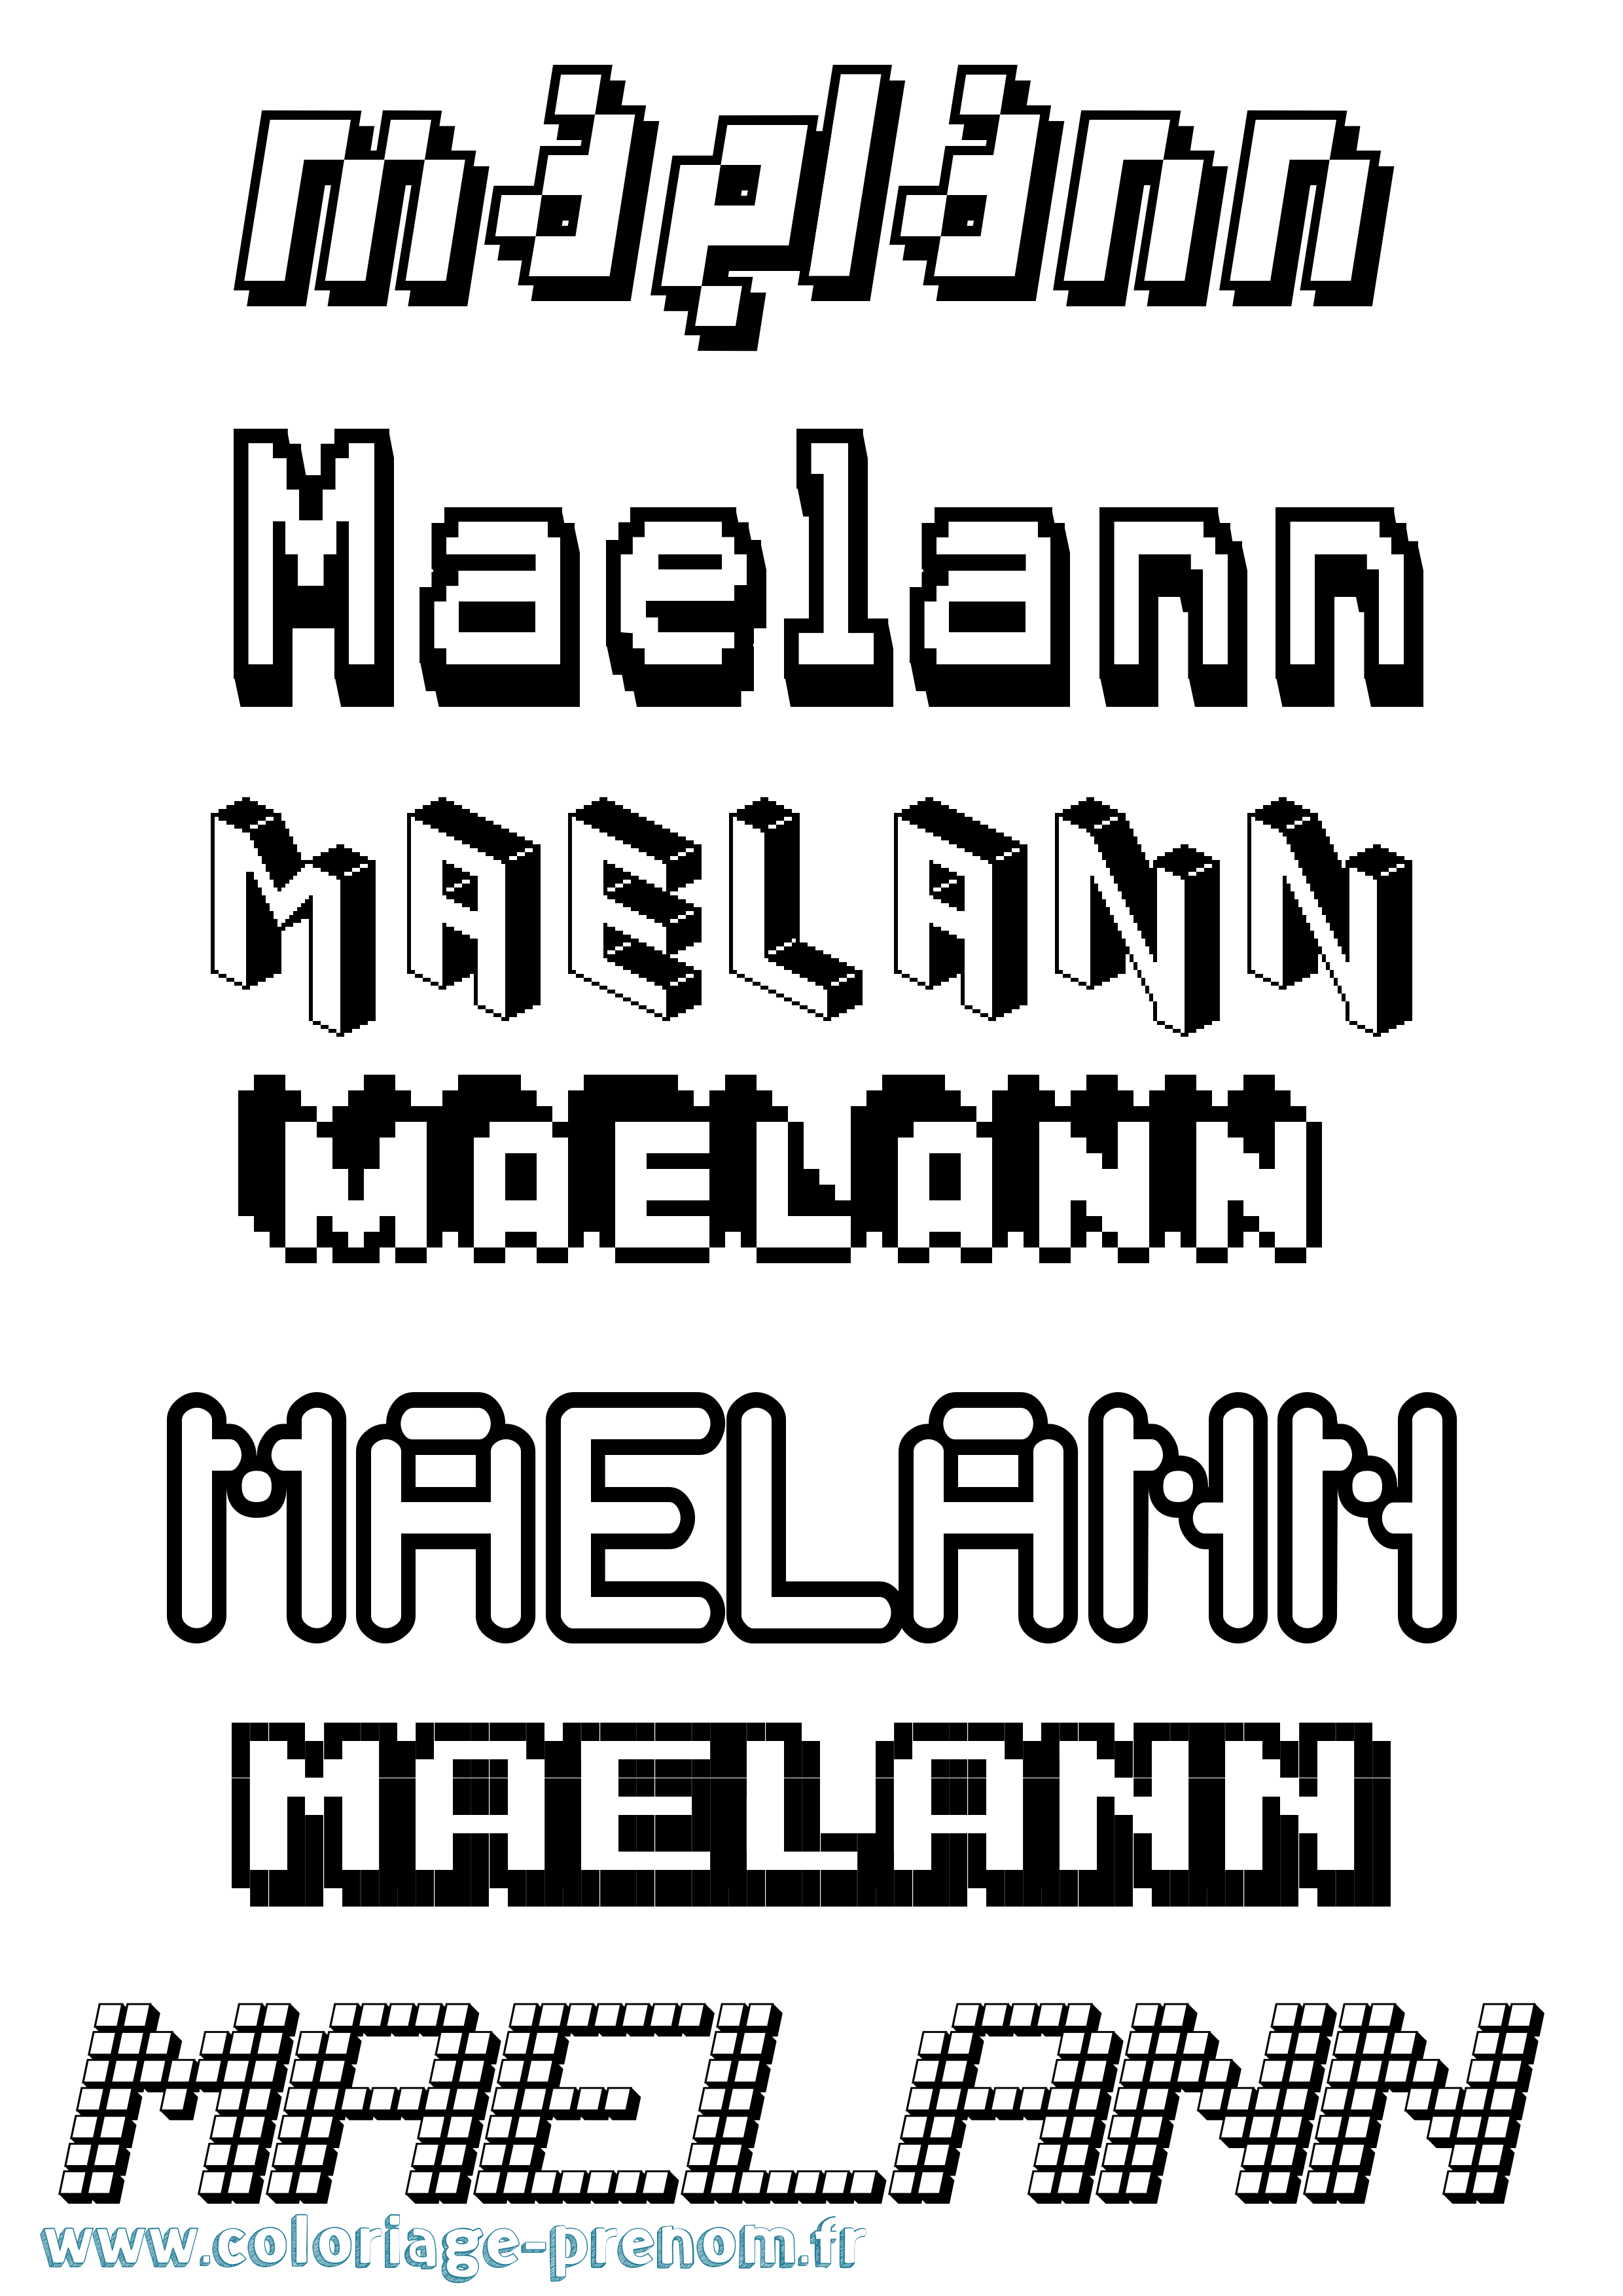 Coloriage prénom Maelann Pixel